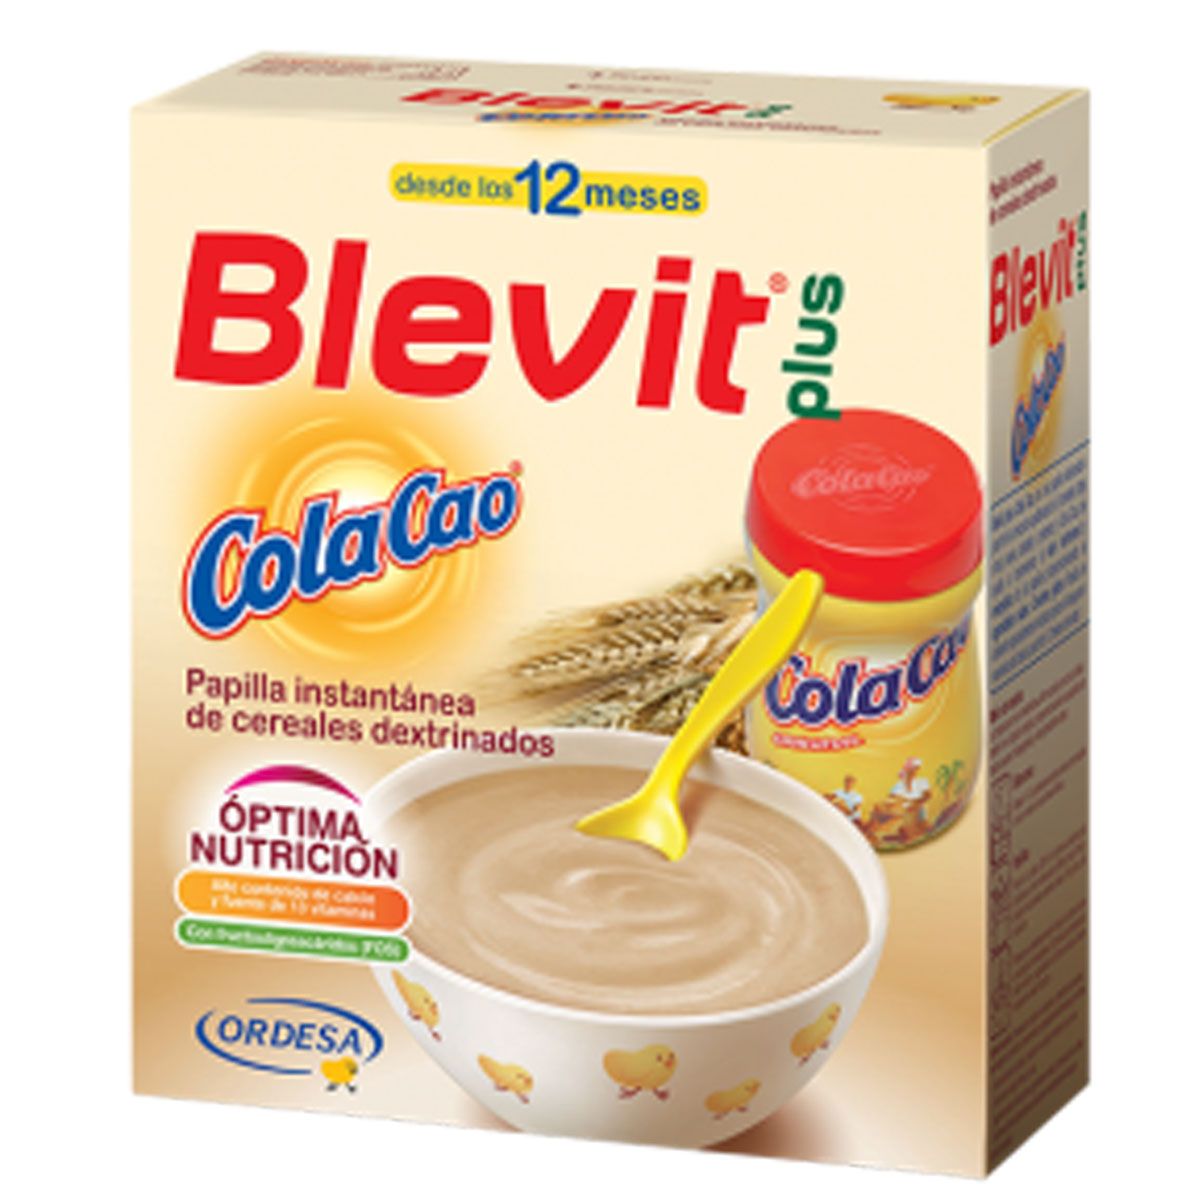 Blevit Plus Duplo 8 Cereales al estilo Bizcocho - Papilla de